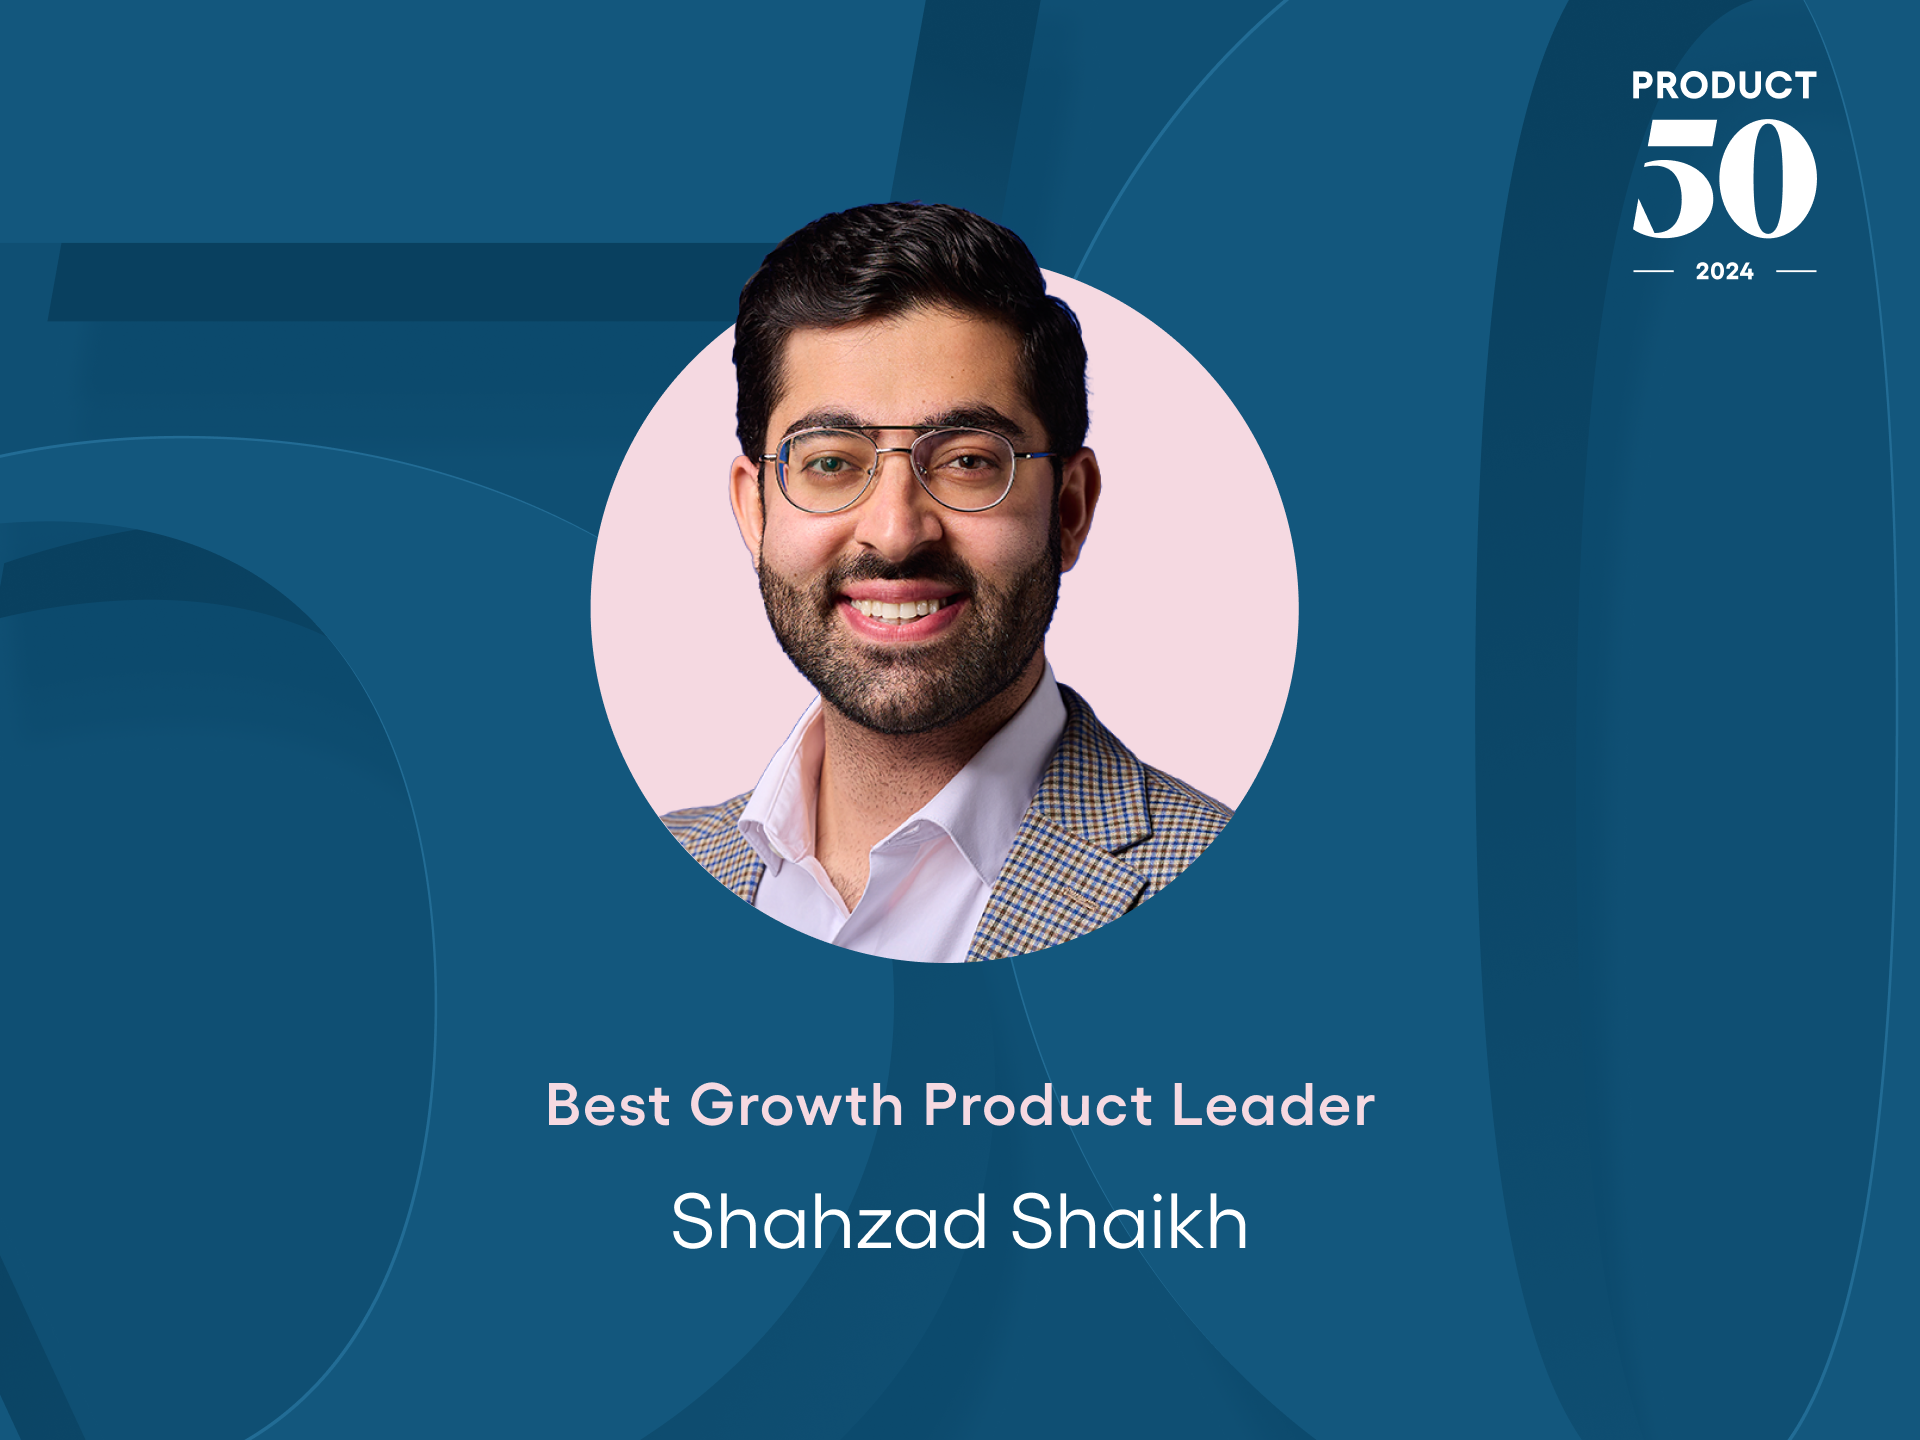 Product 50 Winner: Shahzad Shaikh